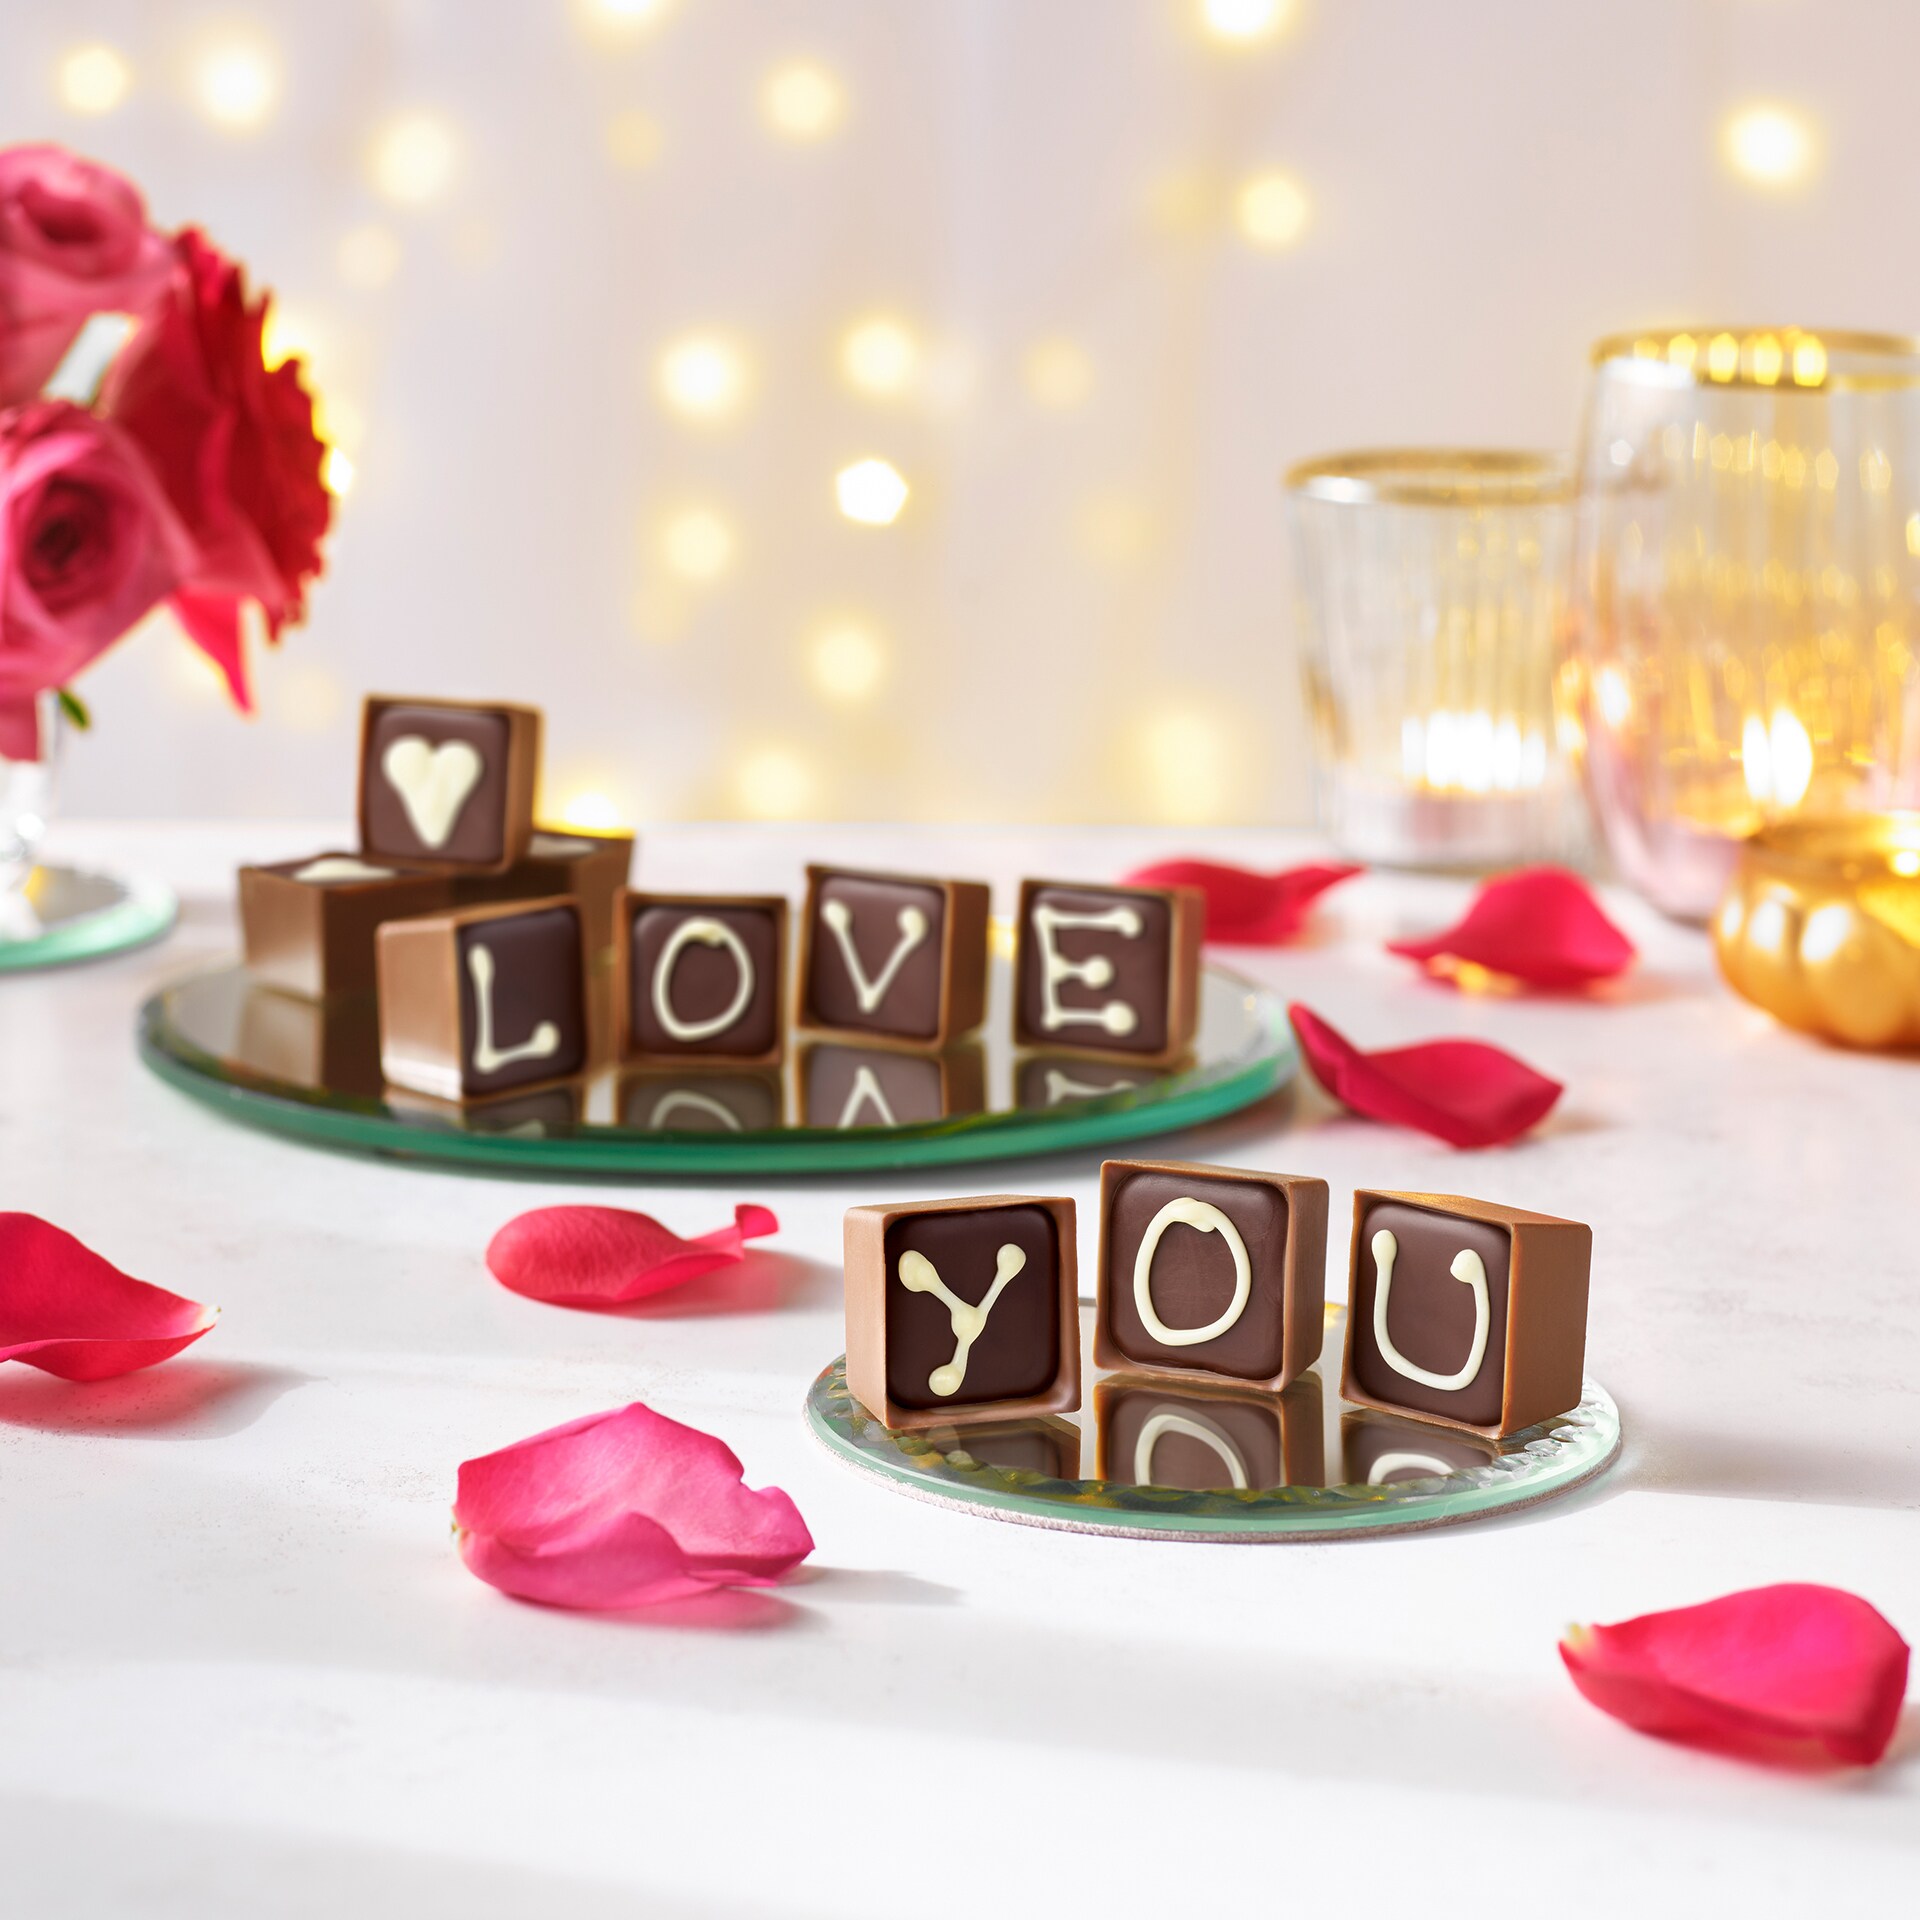 Thorntons Alphabet Truffle chocolates, hand iced with Love K and S